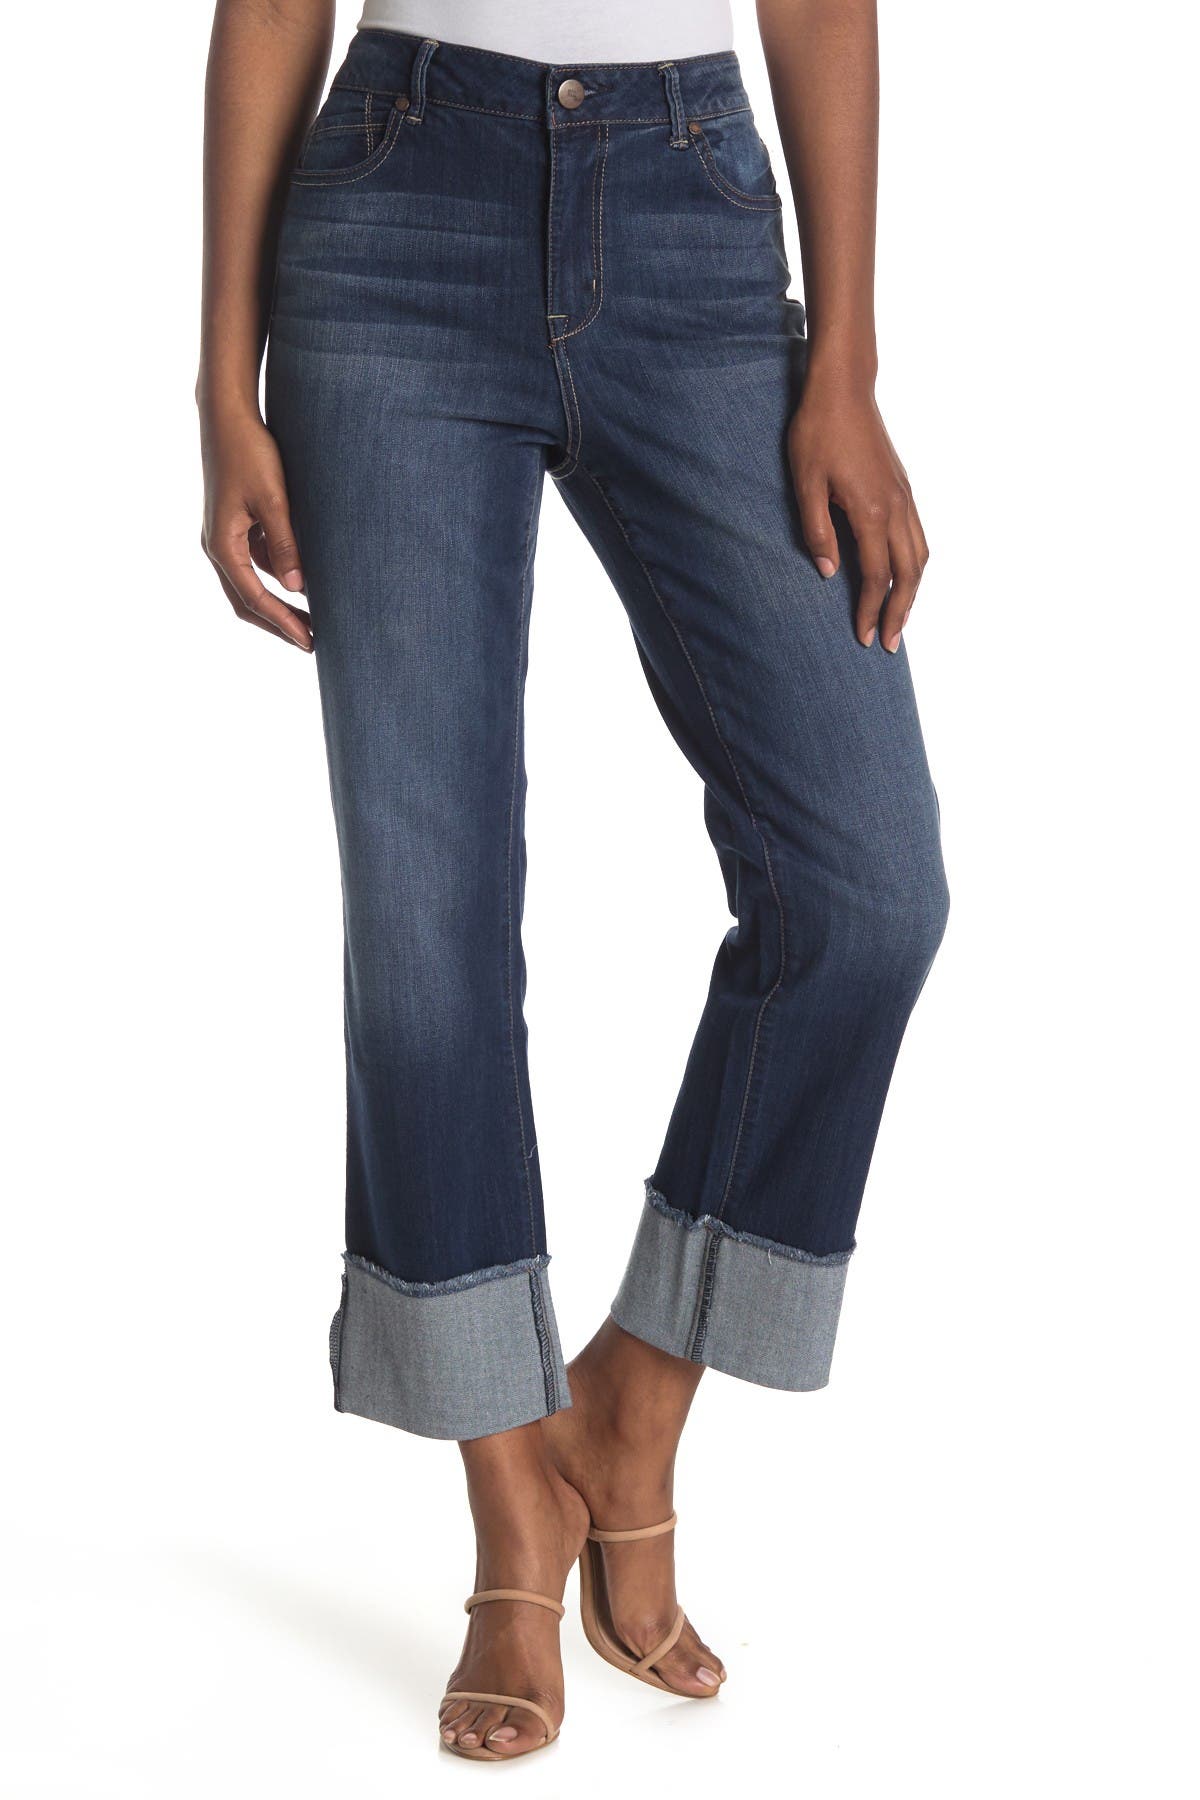 1822 brand jeans